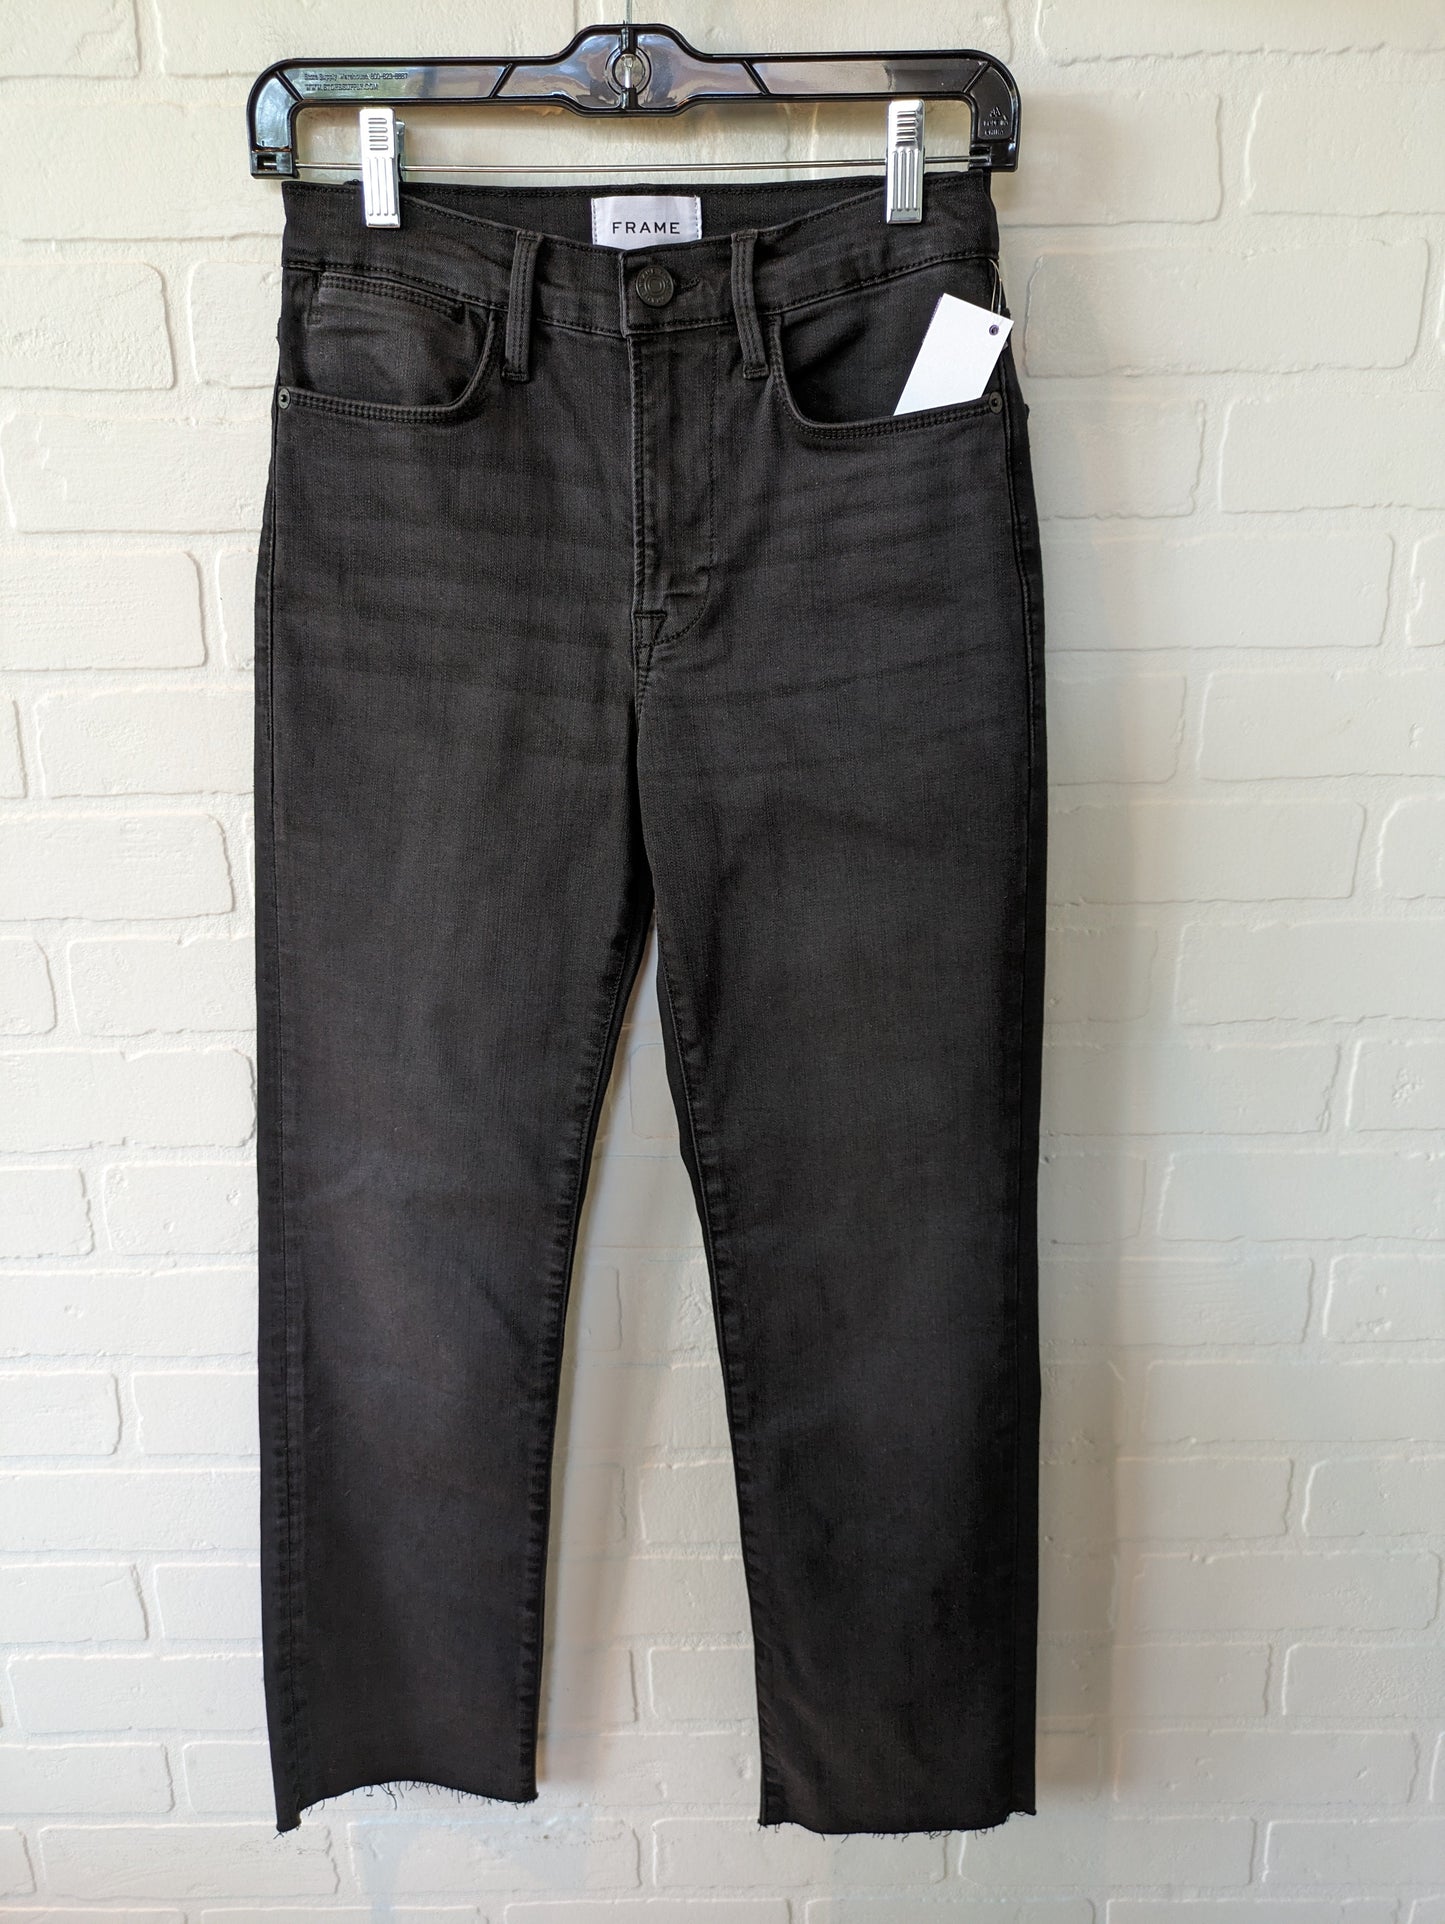 Black Jeans Straight Frame, Size 4